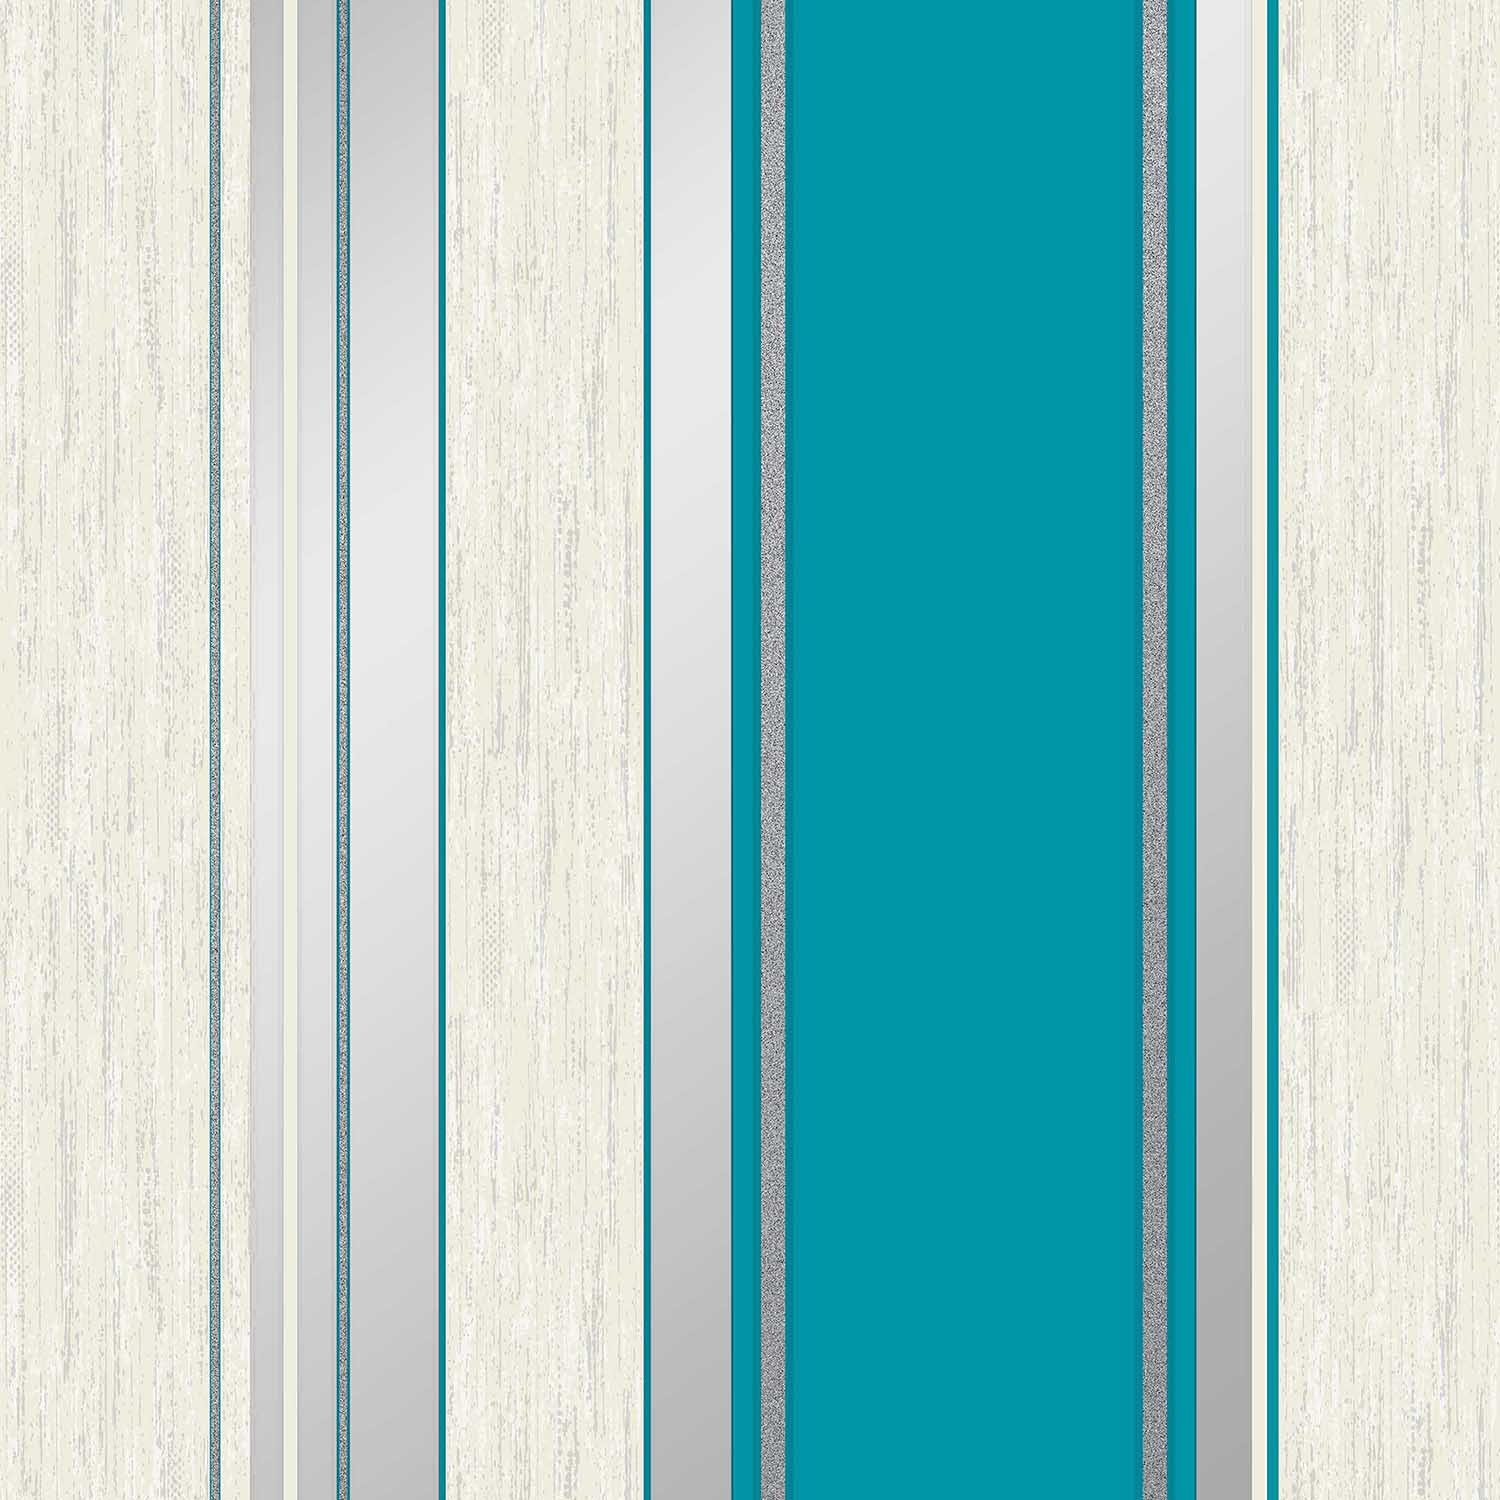 Teal Stripe - HD Wallpaper 